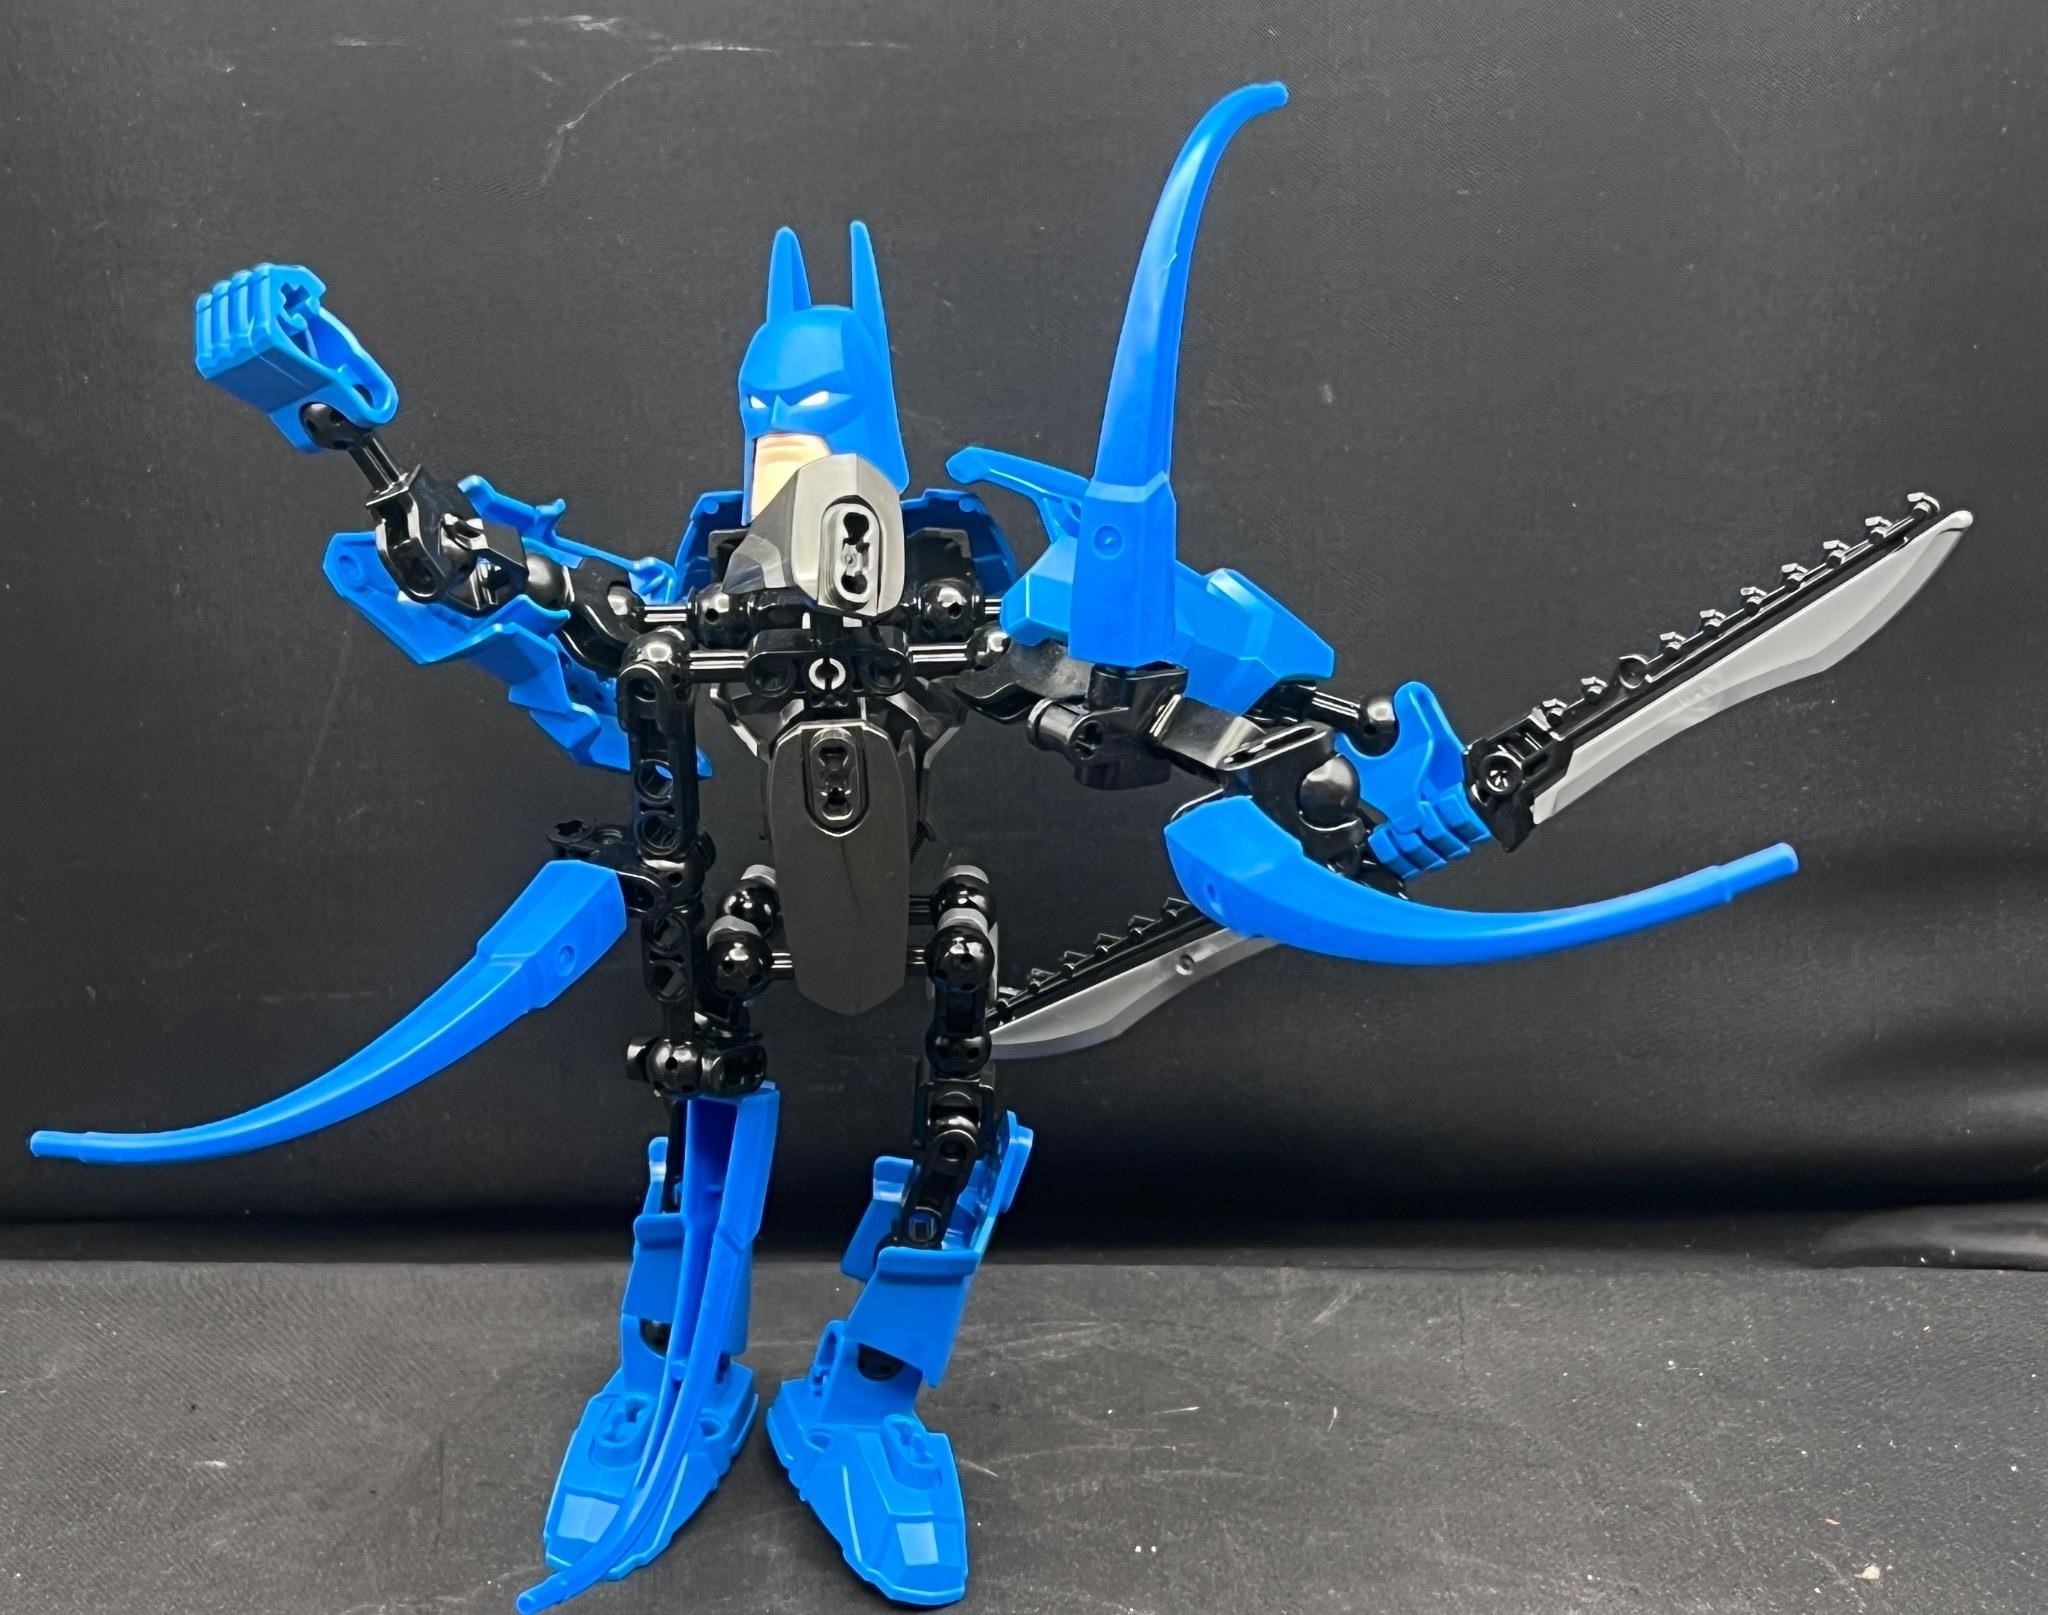 Lego Batman incomplete